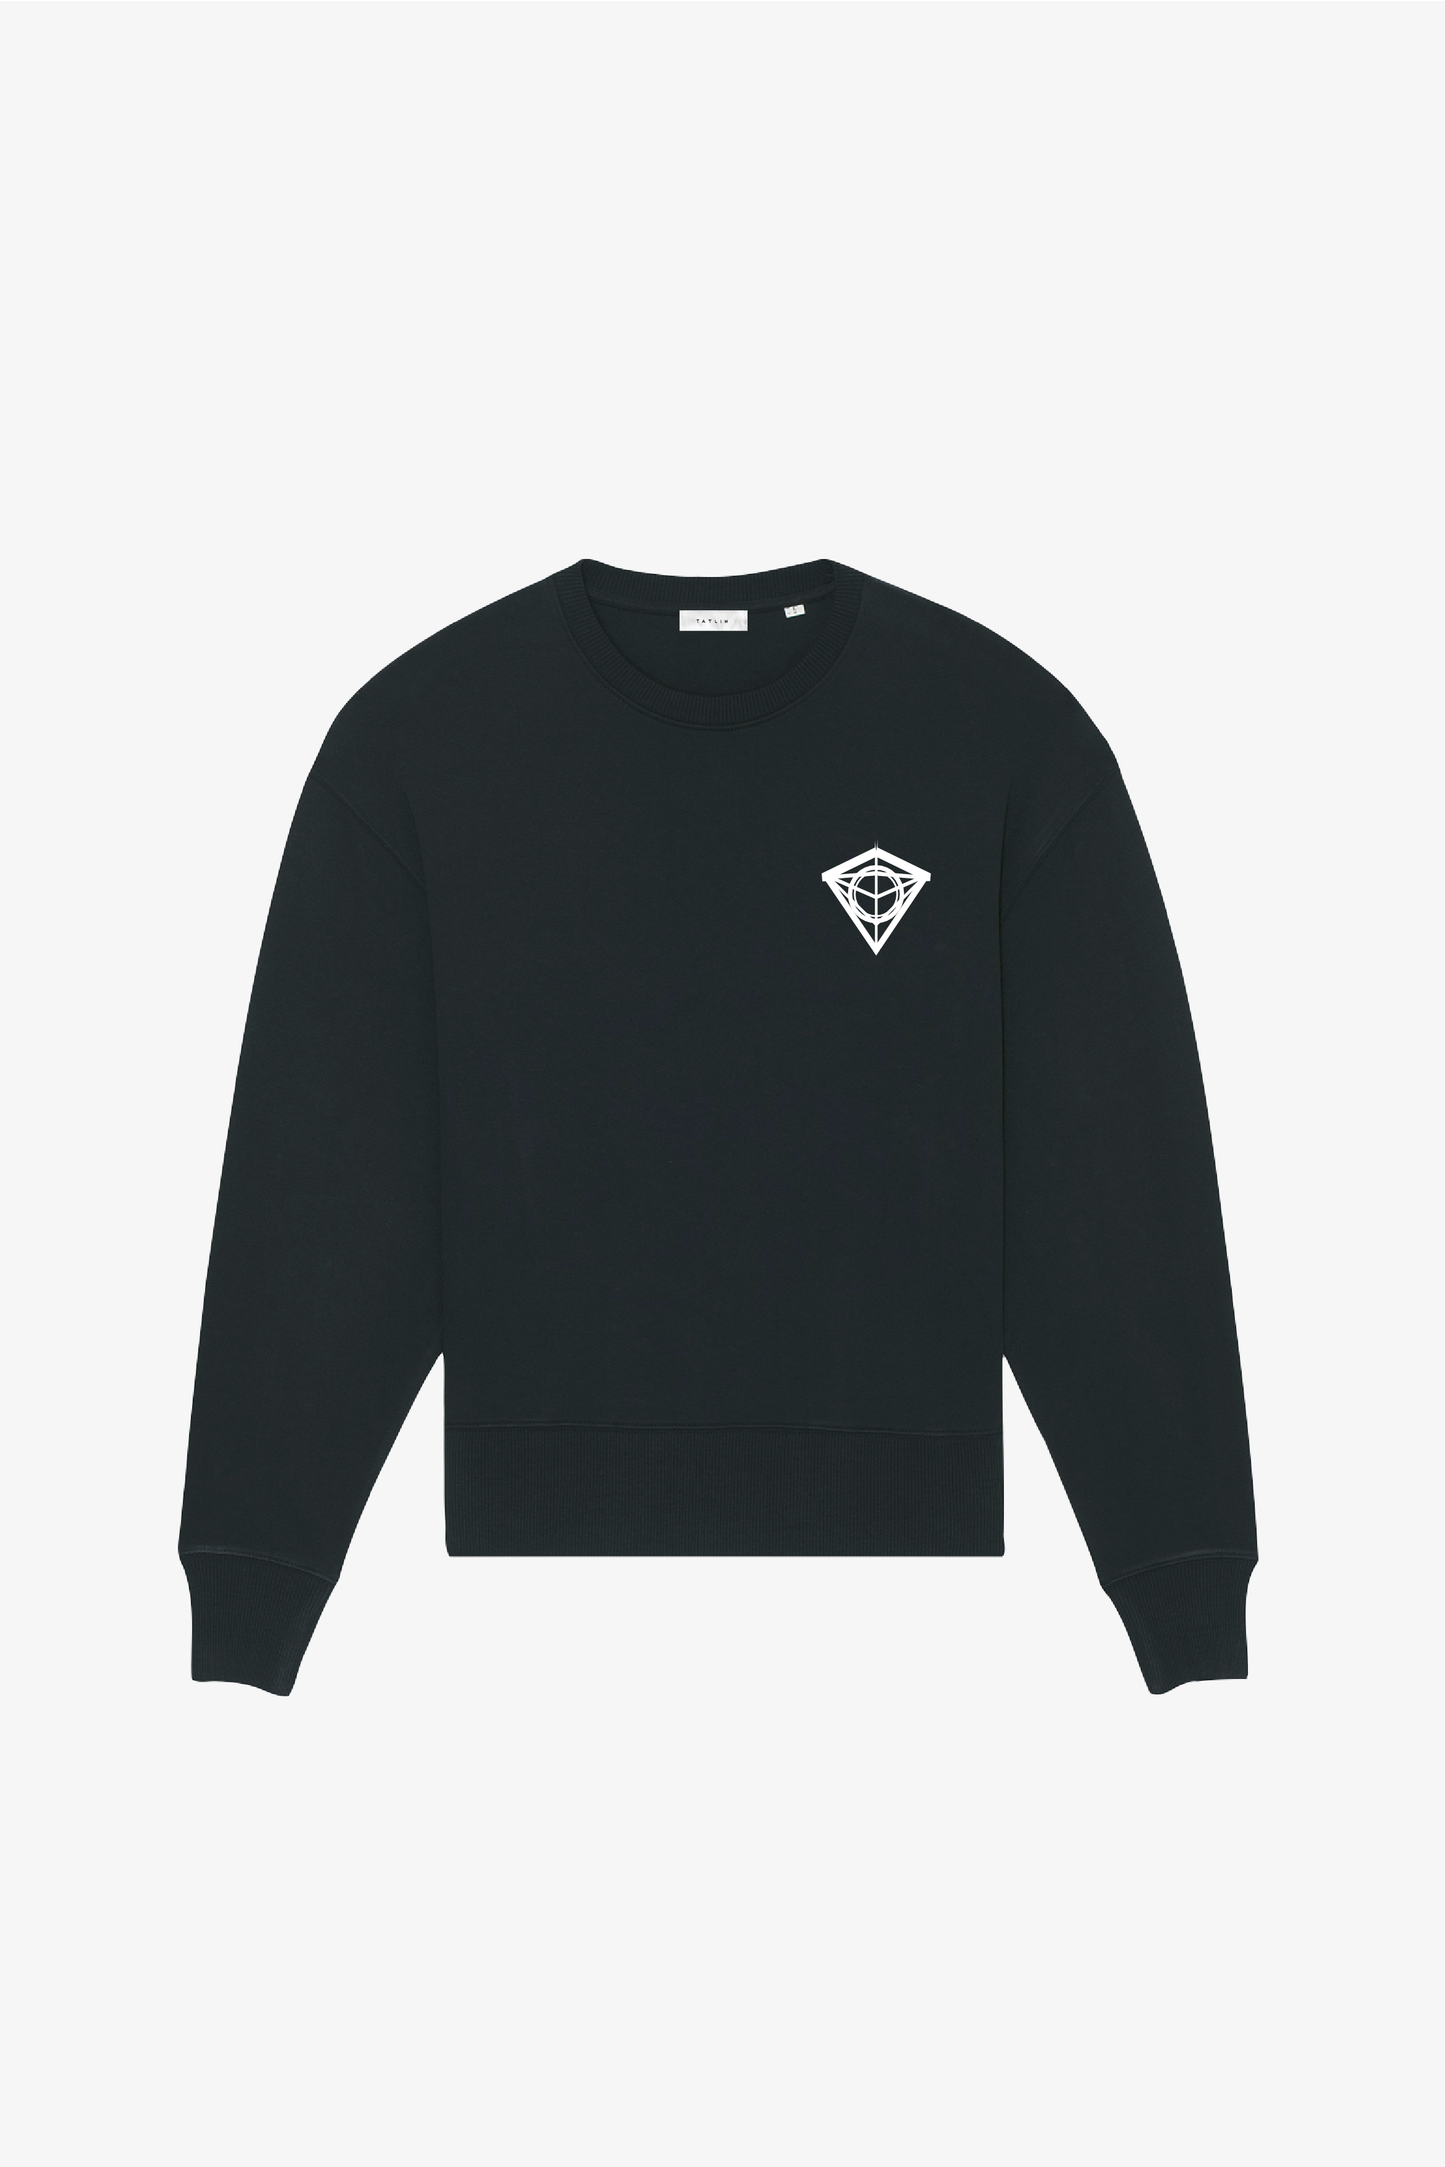 Classic Black Oversized Diamond Sweatshirt